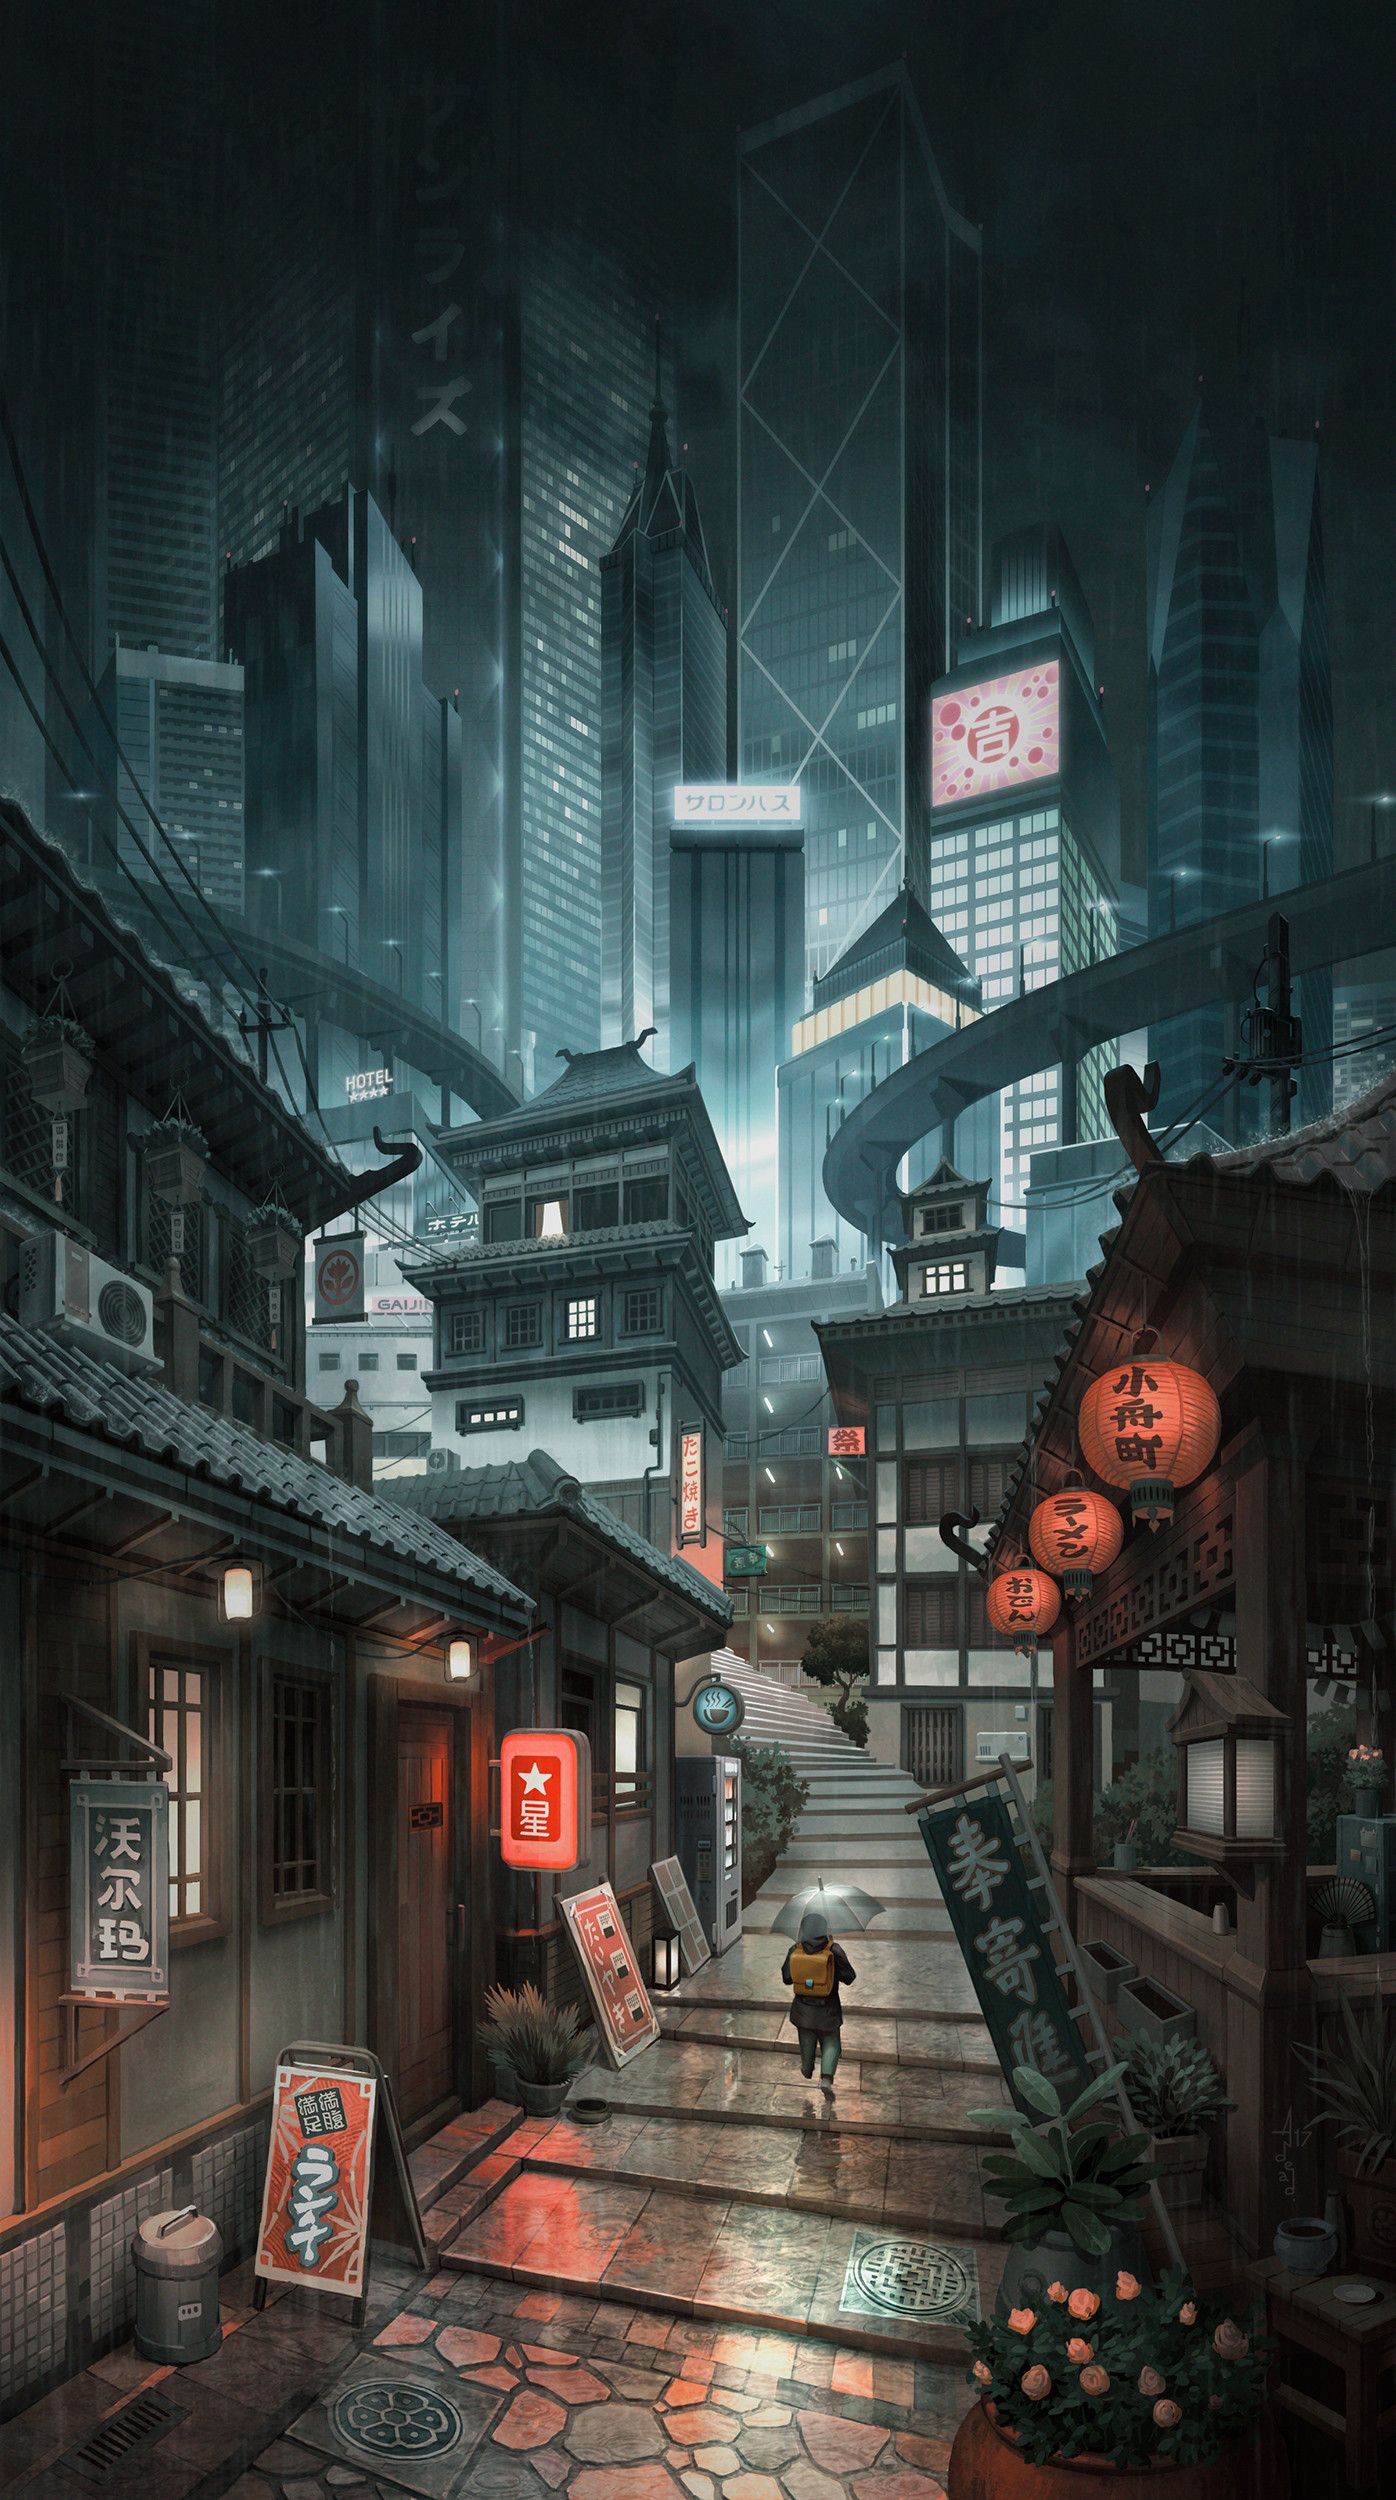 Wallpaper, Andrey Maximov, Tokyo, Japan, street, house, lantern, rain, backpacks, umbrella, plants, stairs 1396x2500